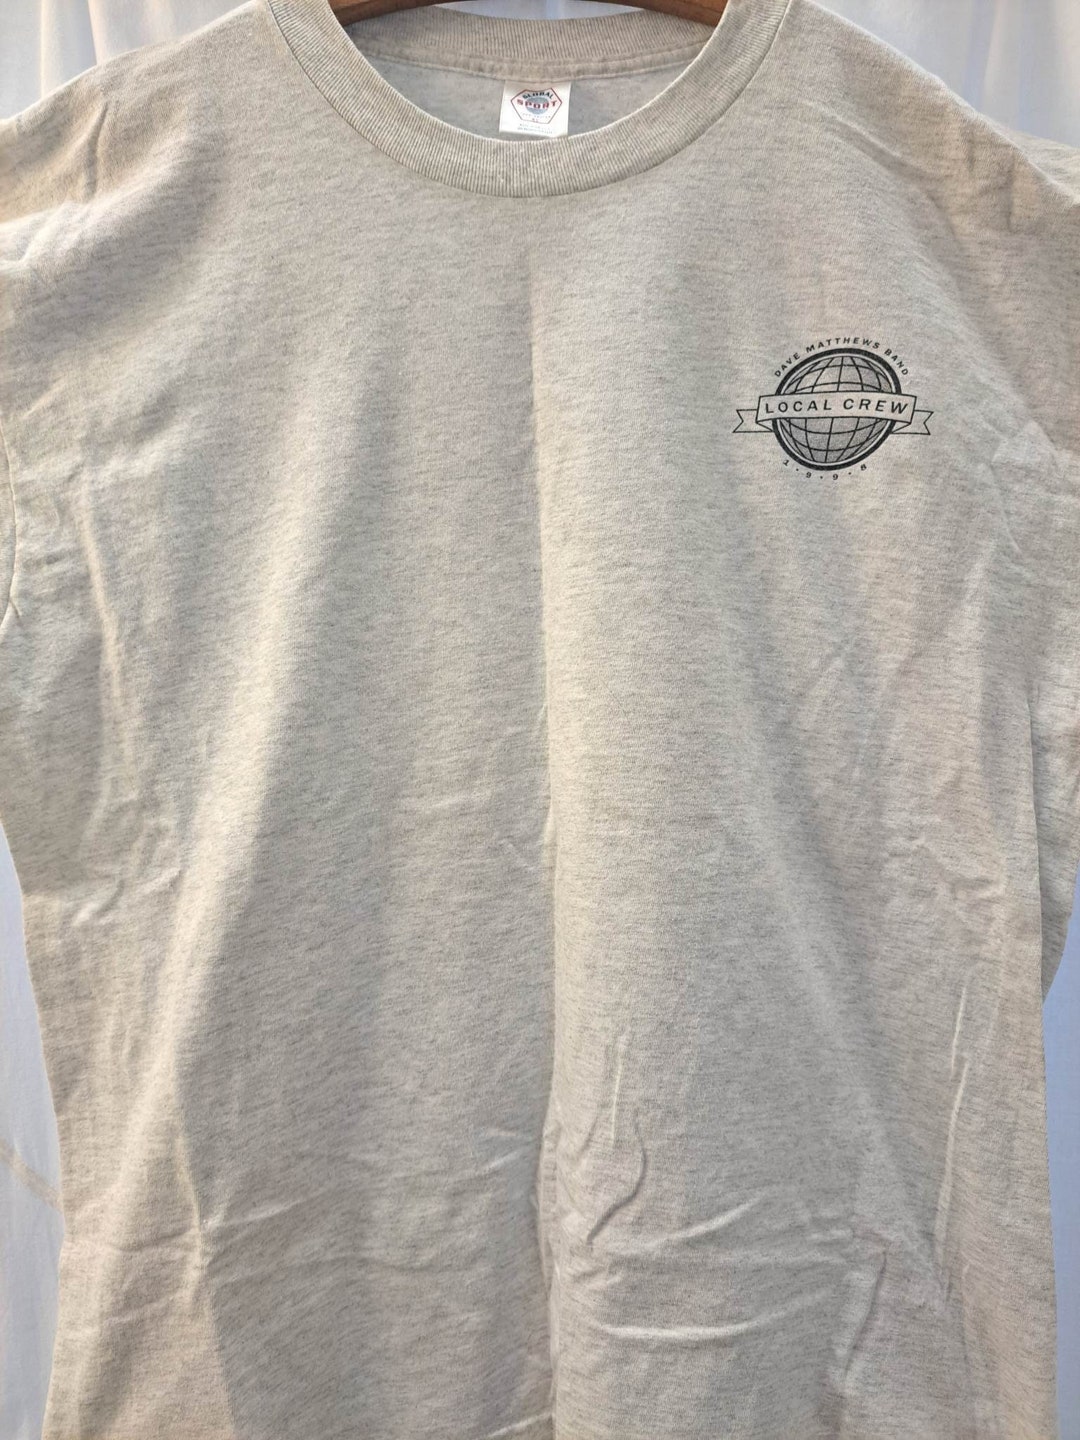 Dave Matthews Band 1998 Spring Tour Local Crew XL T-shirt - Etsy